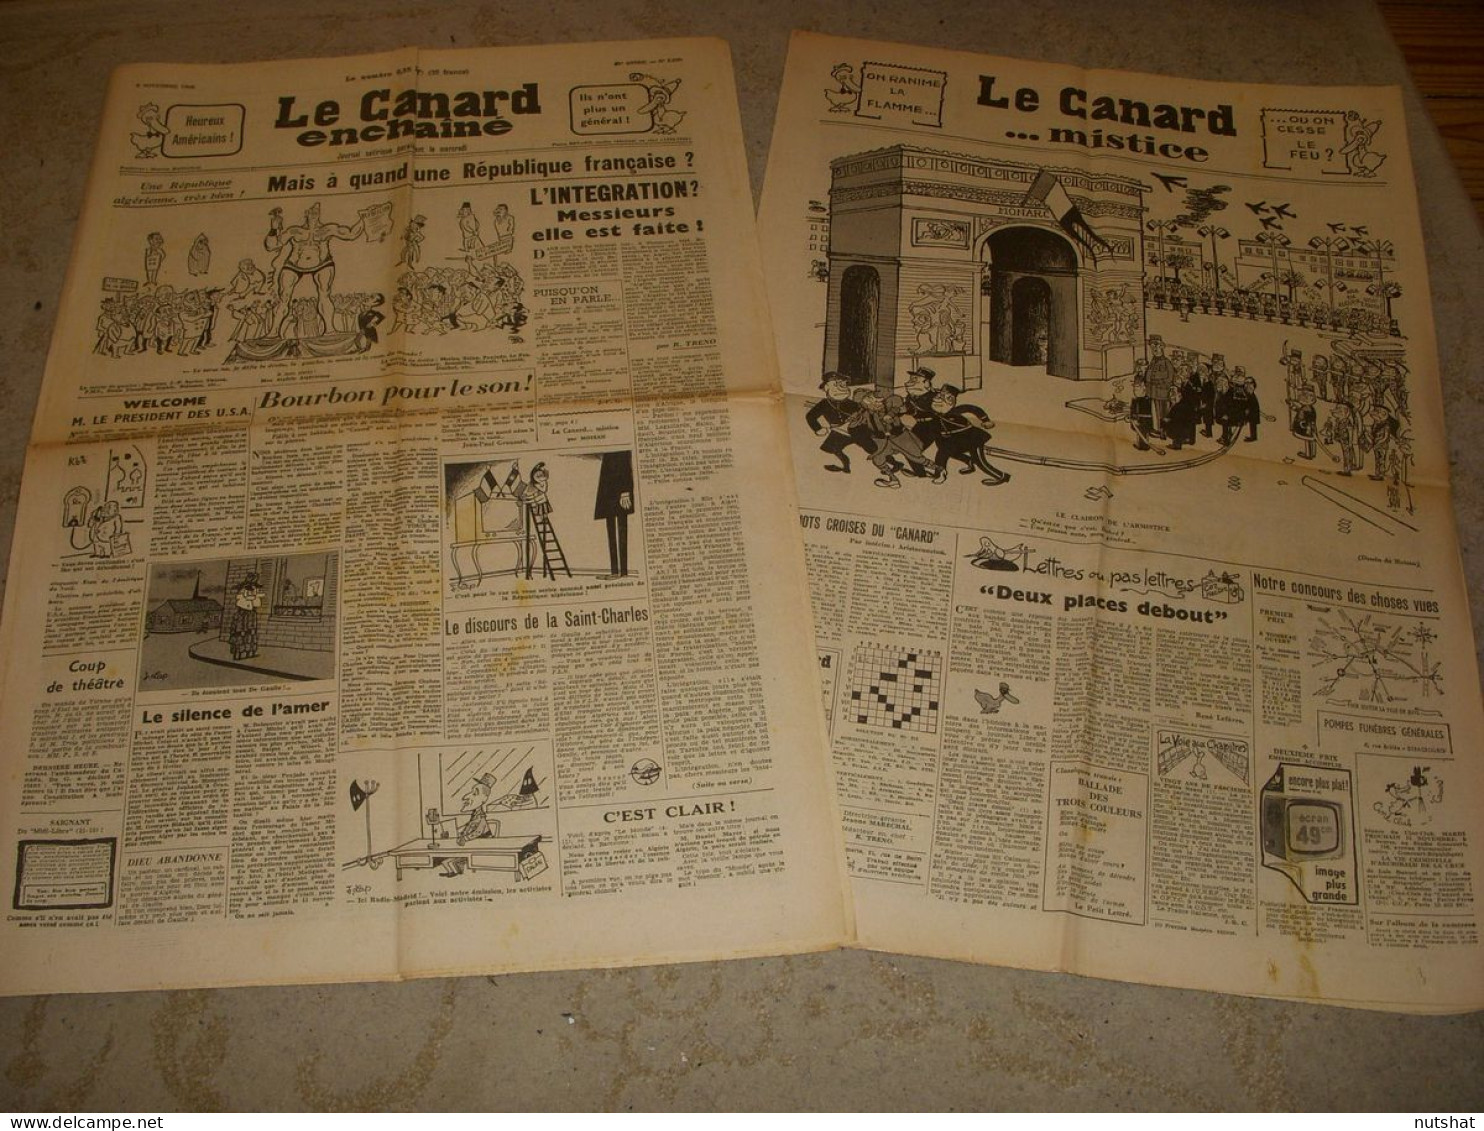 CANARD ENCHAINE 2090 09.11.1960 Pierre SABBAGH THEATRE RUY BLAS Louis MOLLION - Politik